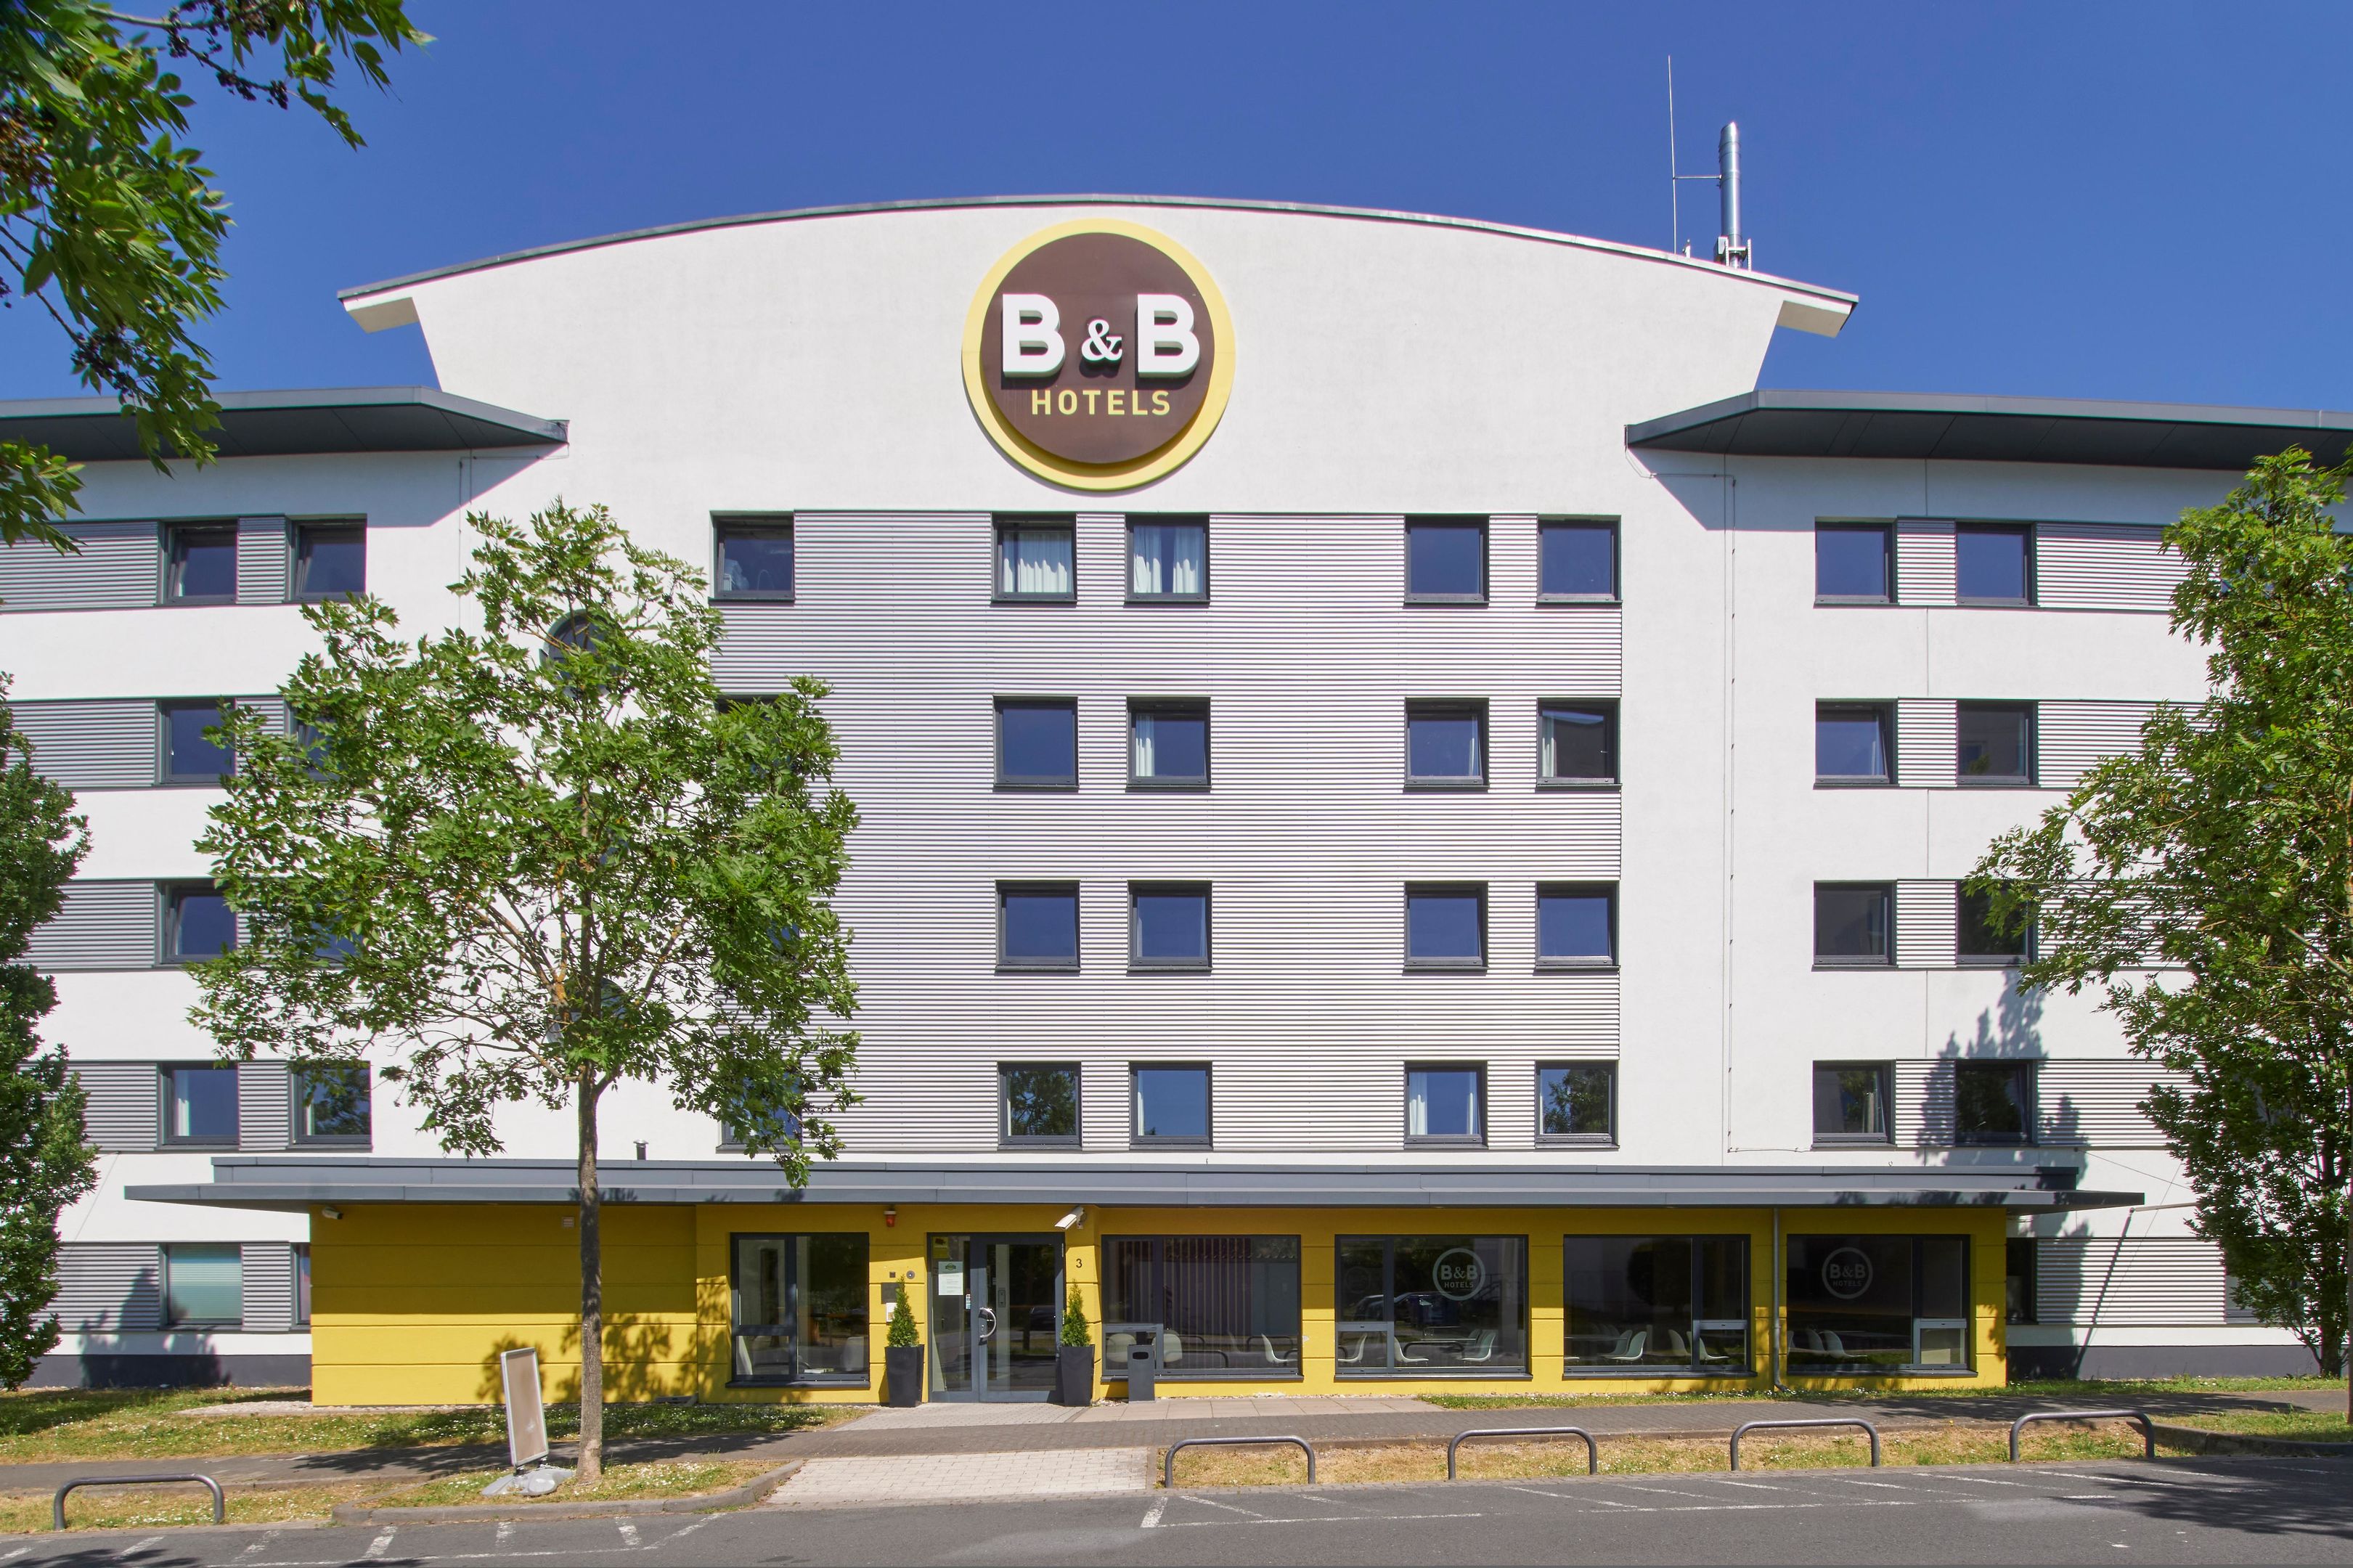 B&B HOTEL Frankfurt-Niederrad, Colmarer Straße 3 in Frankfurt am Main